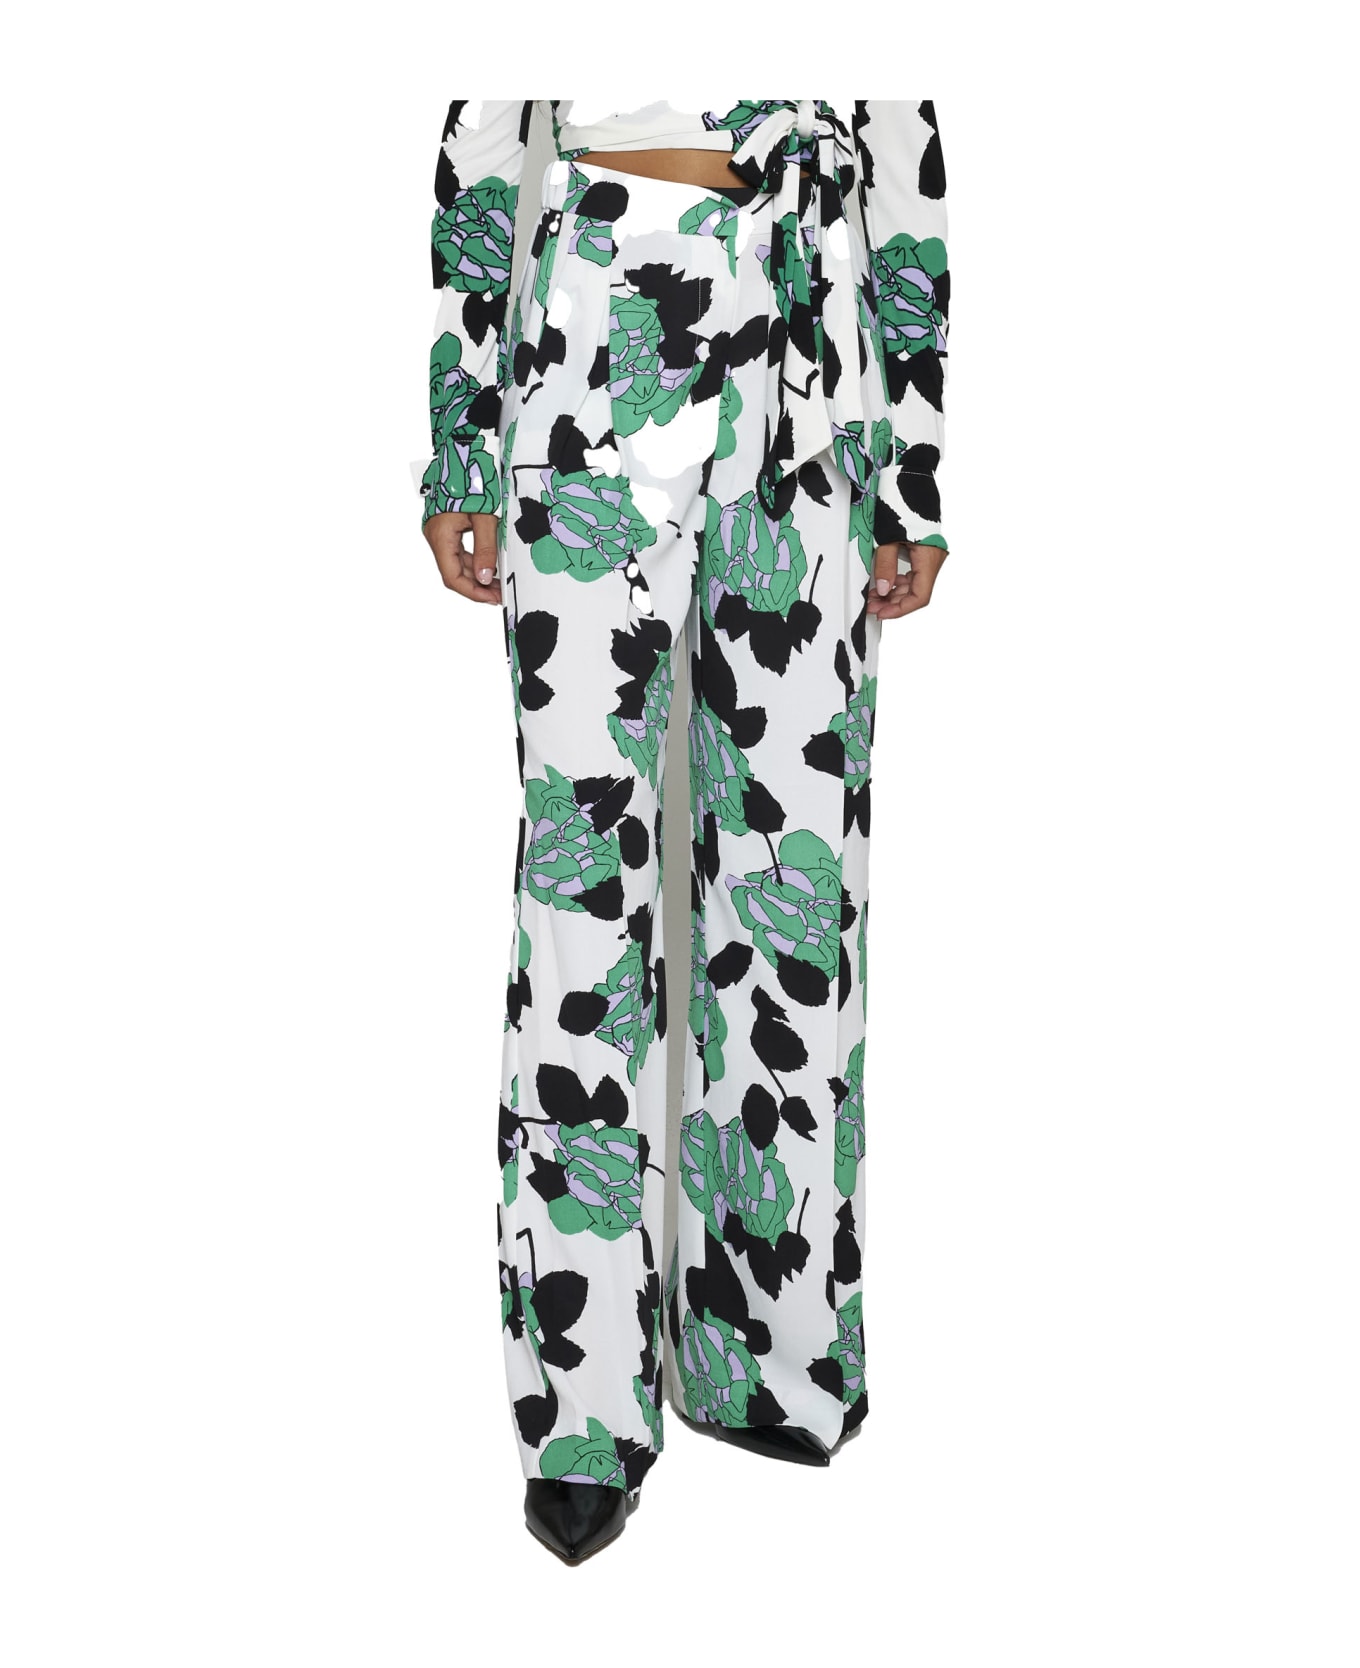 Diane Von Furstenberg Pants - Camo floral lg ivory